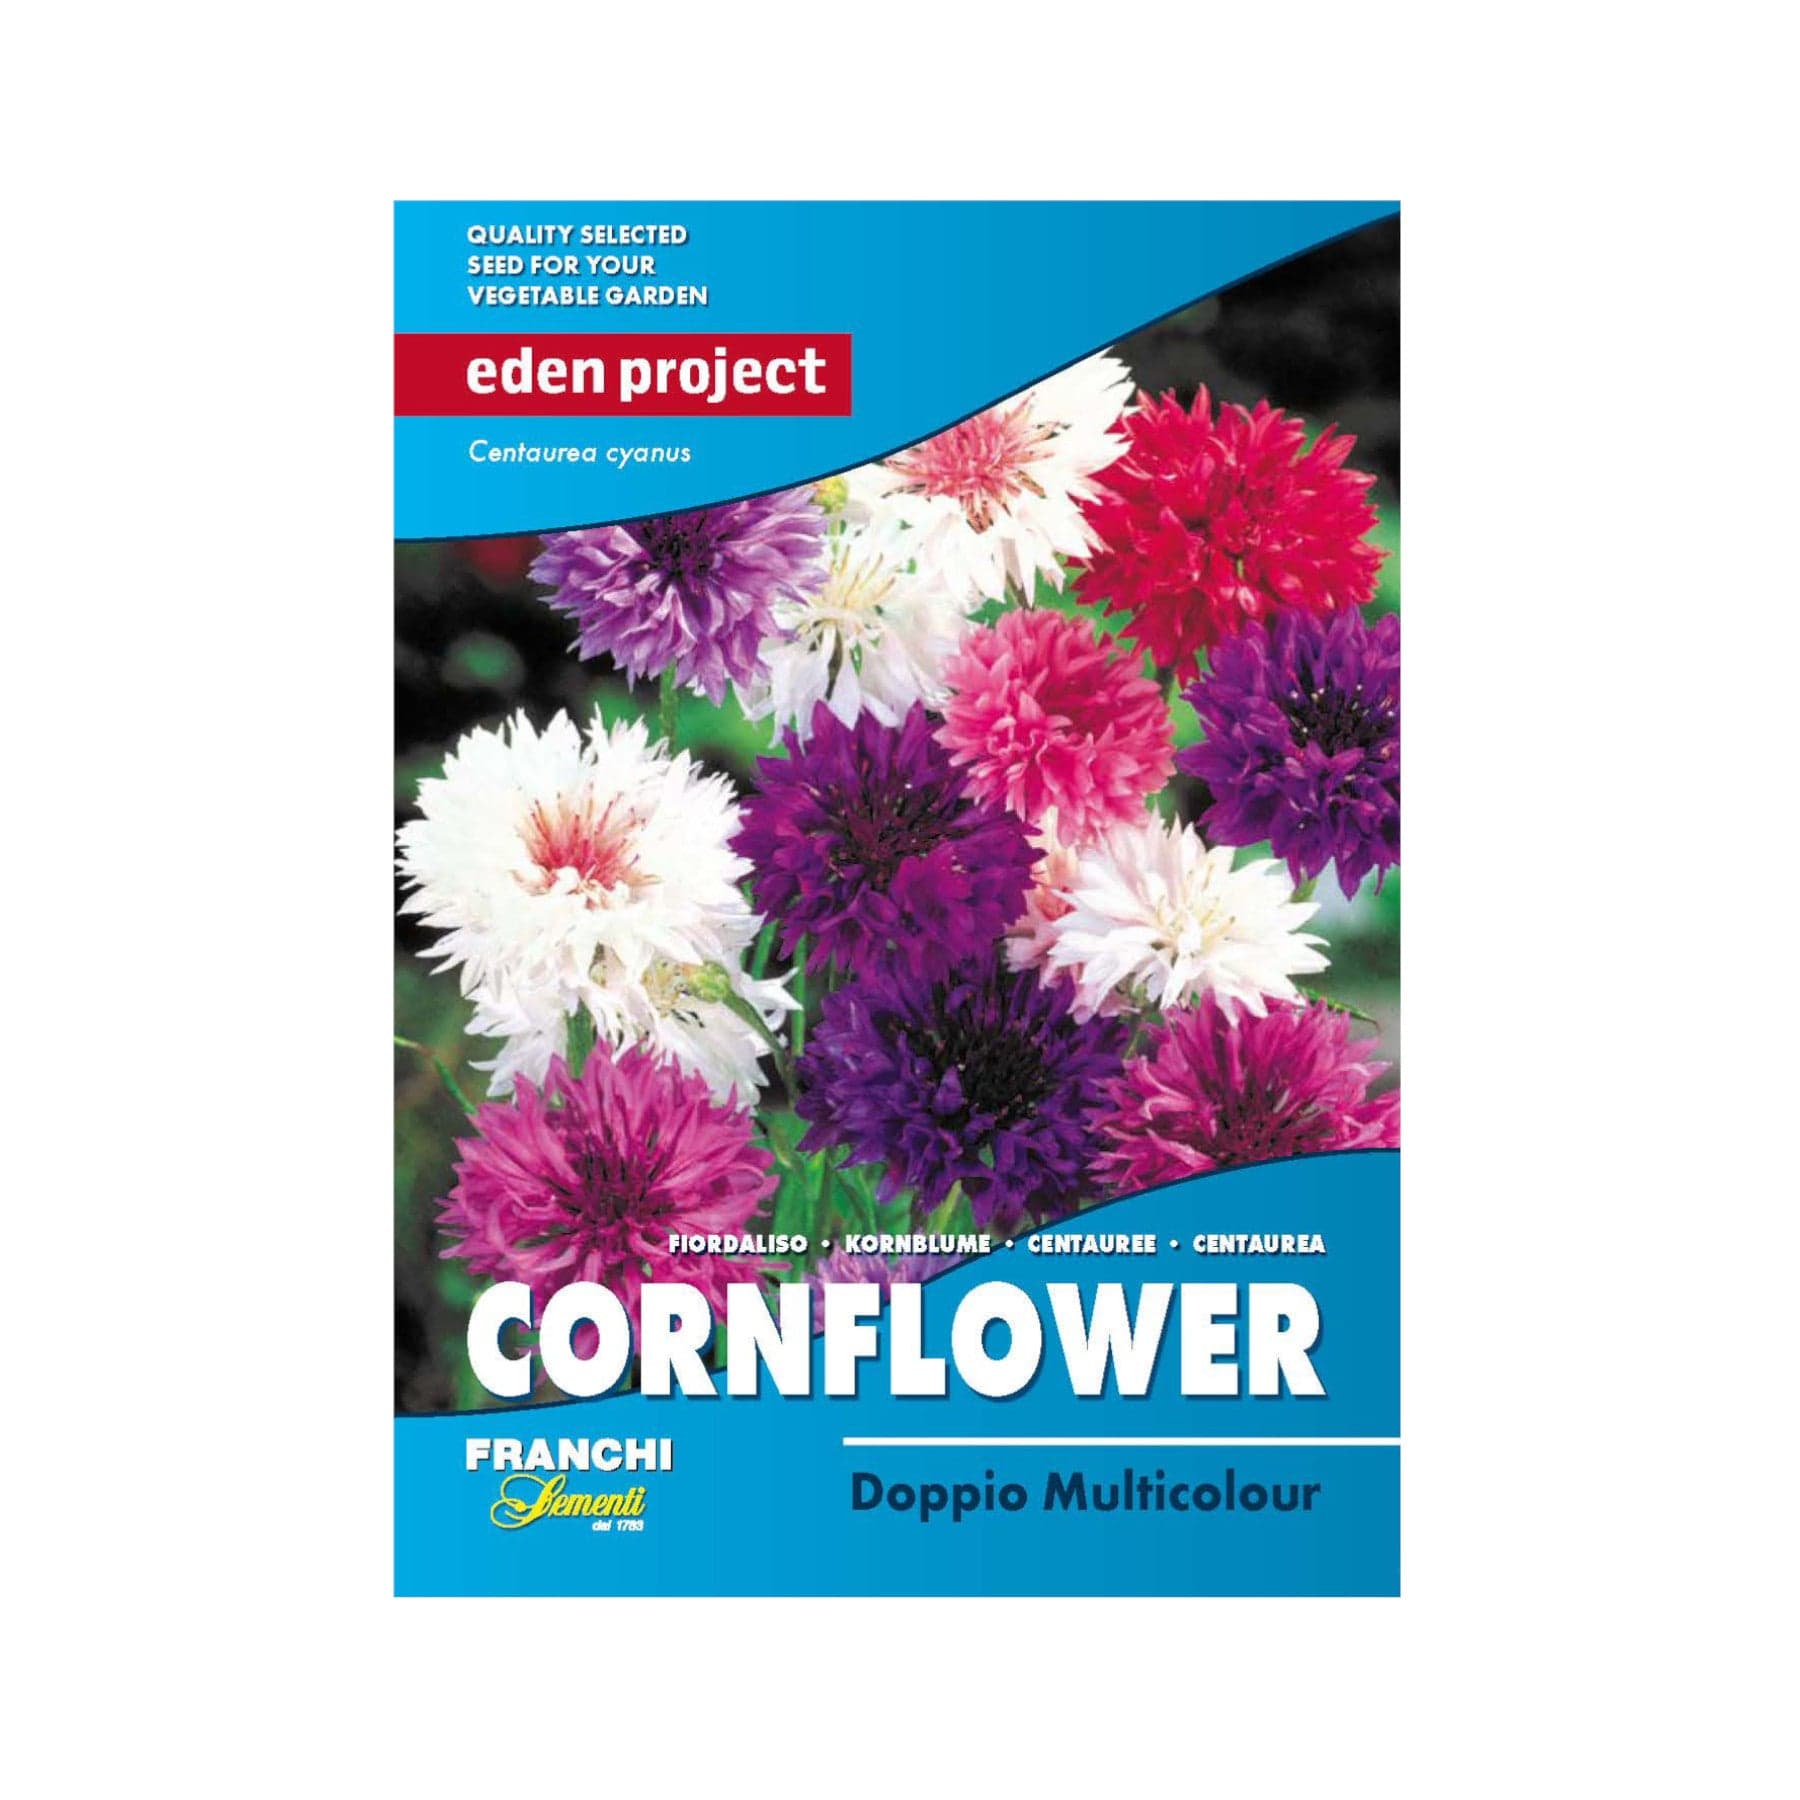 Eden Project Cornflower seed packet featuring Centaurea cyanus, multicolored double flowers, from Franchi Sementi brand.